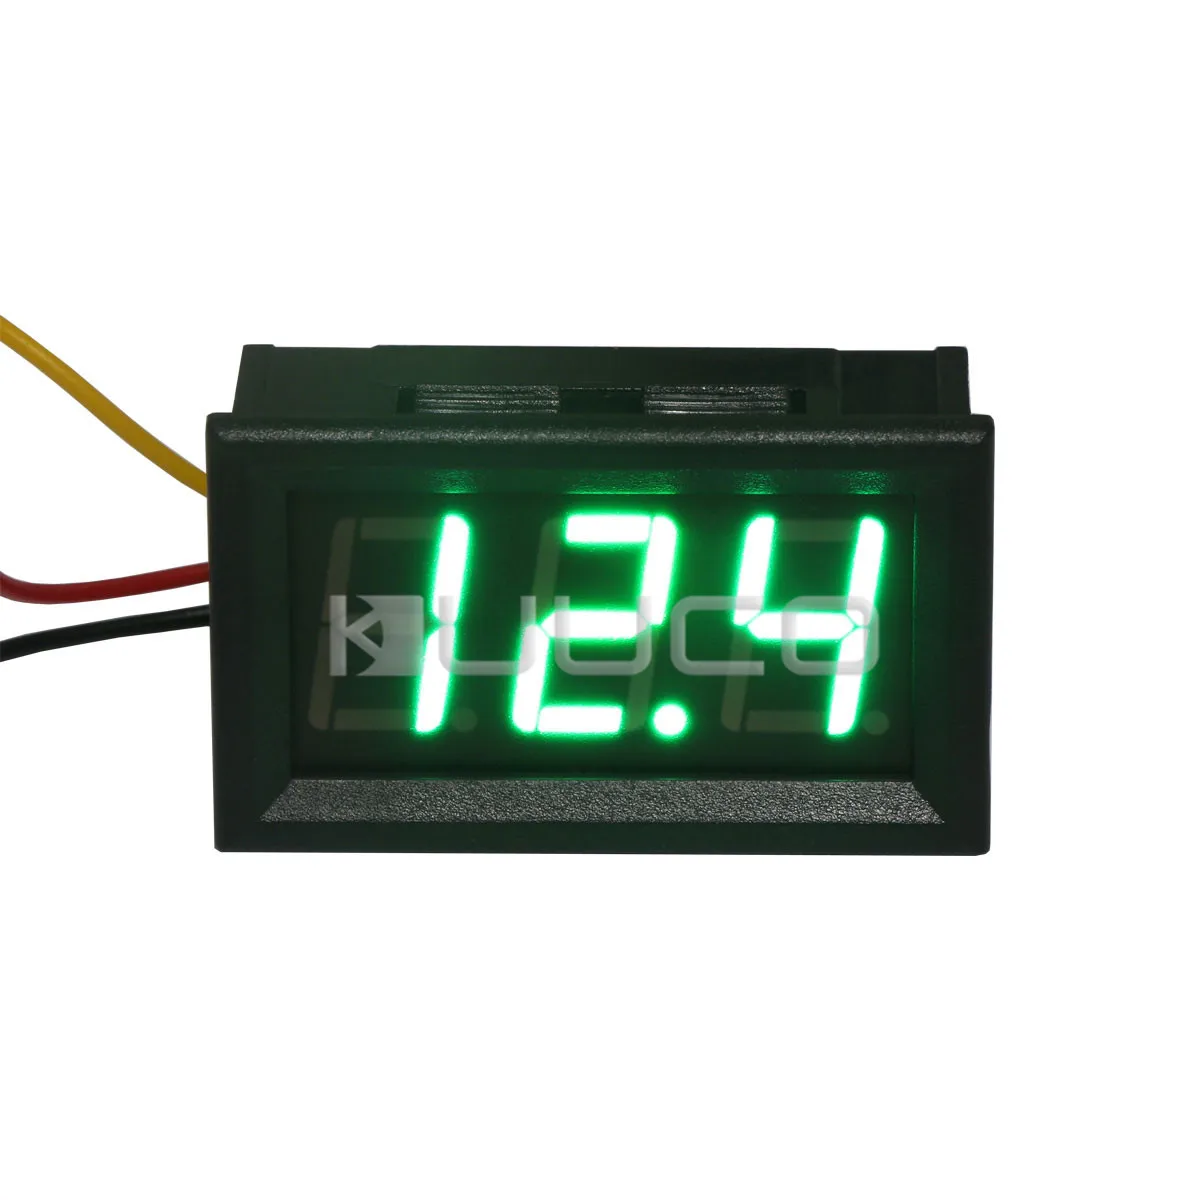 Useful LED Panel Meter Voltage Meter Digital Display Mini DC Voltmeter 3 Colors 